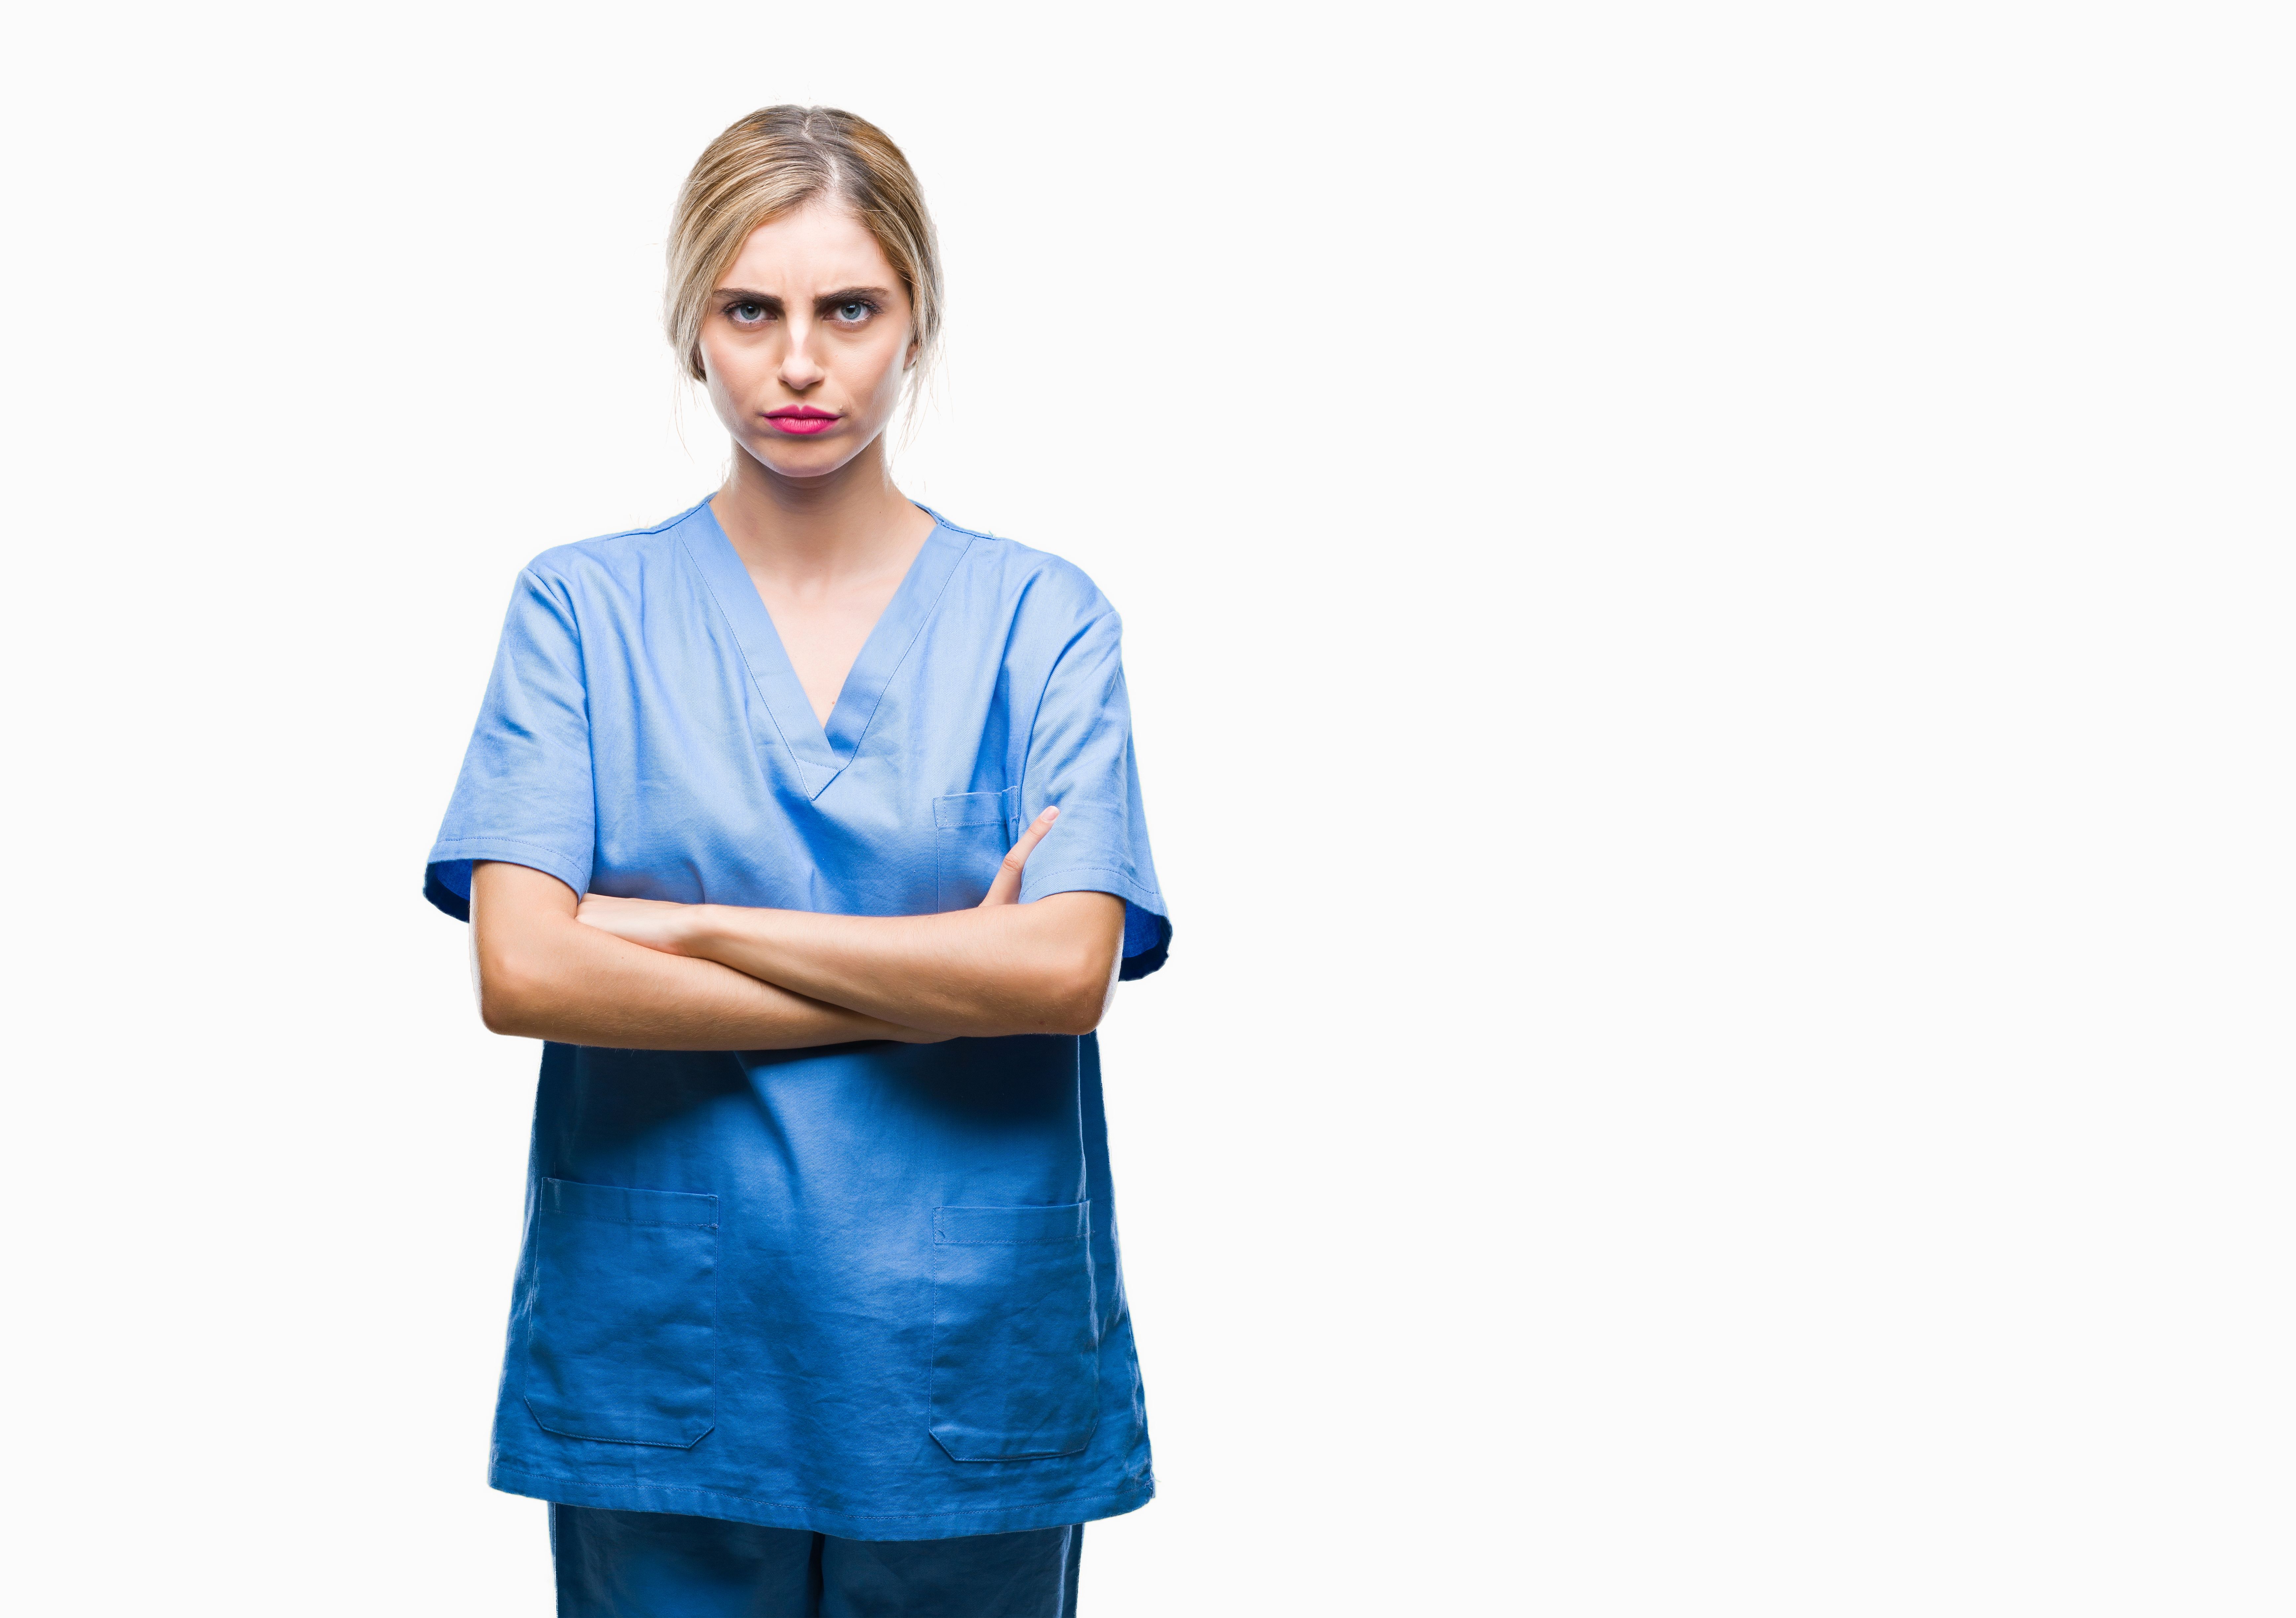 An upset nurse. | Source: Getty Images